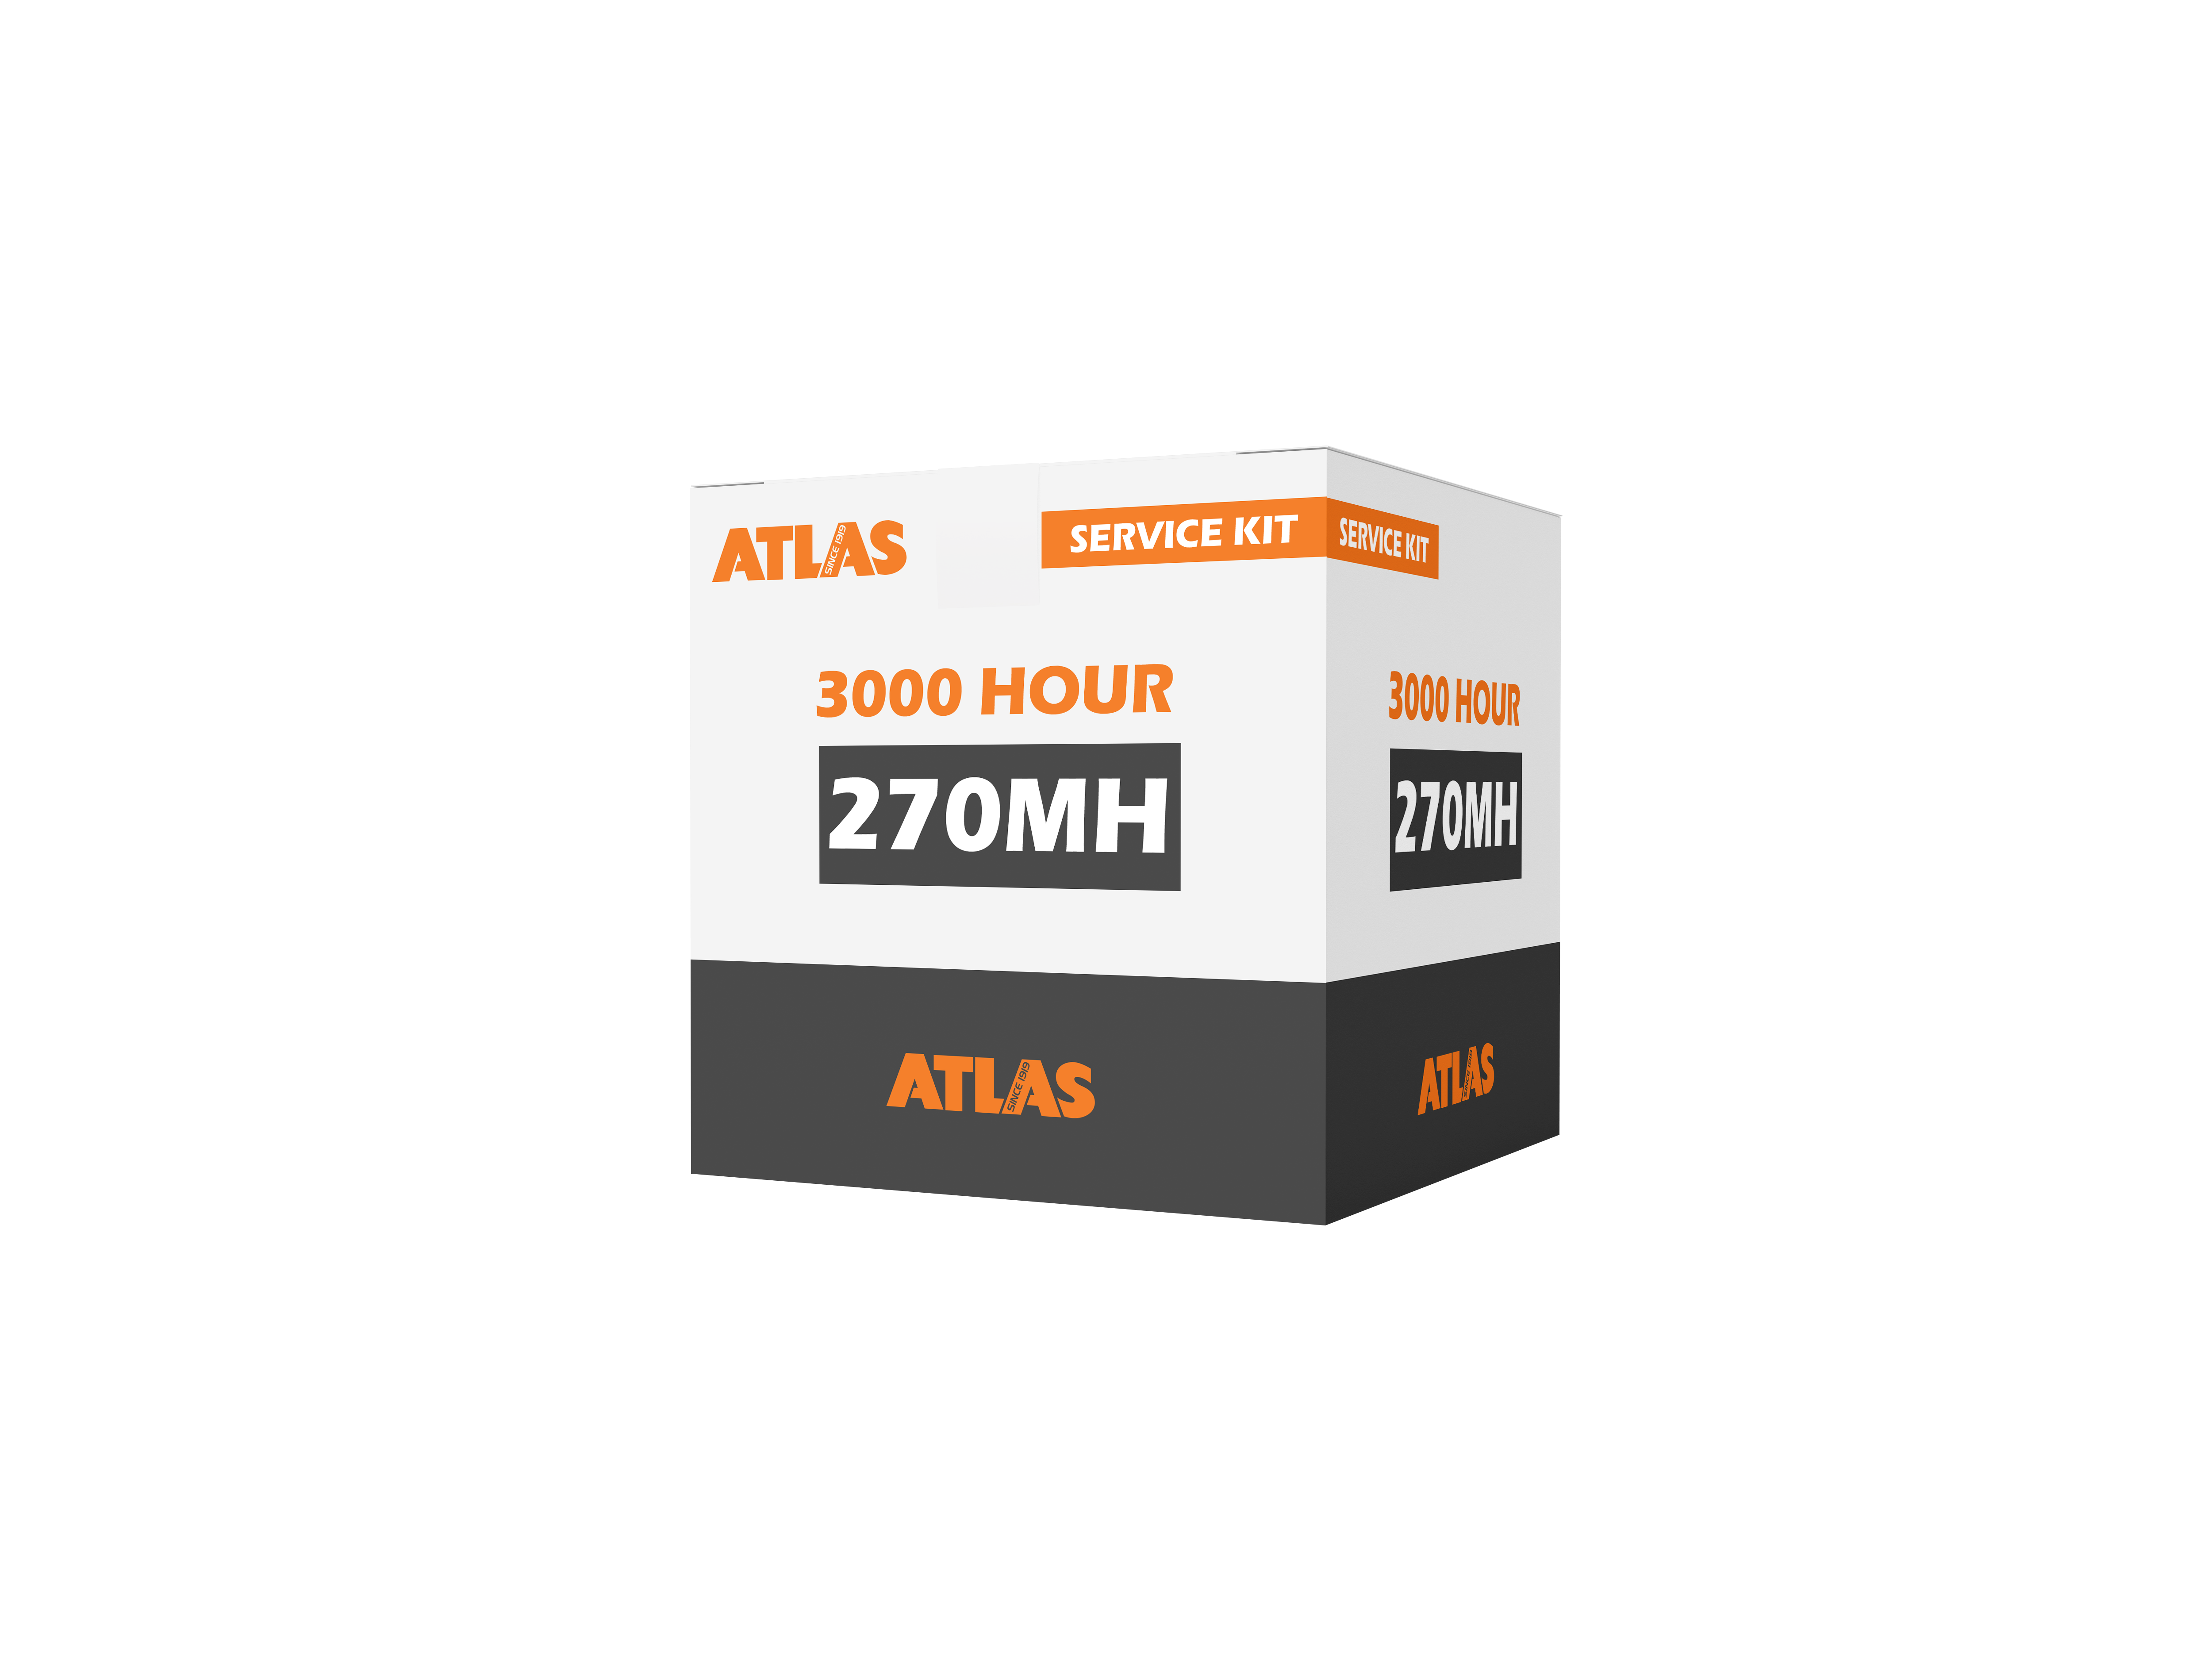 Atlas 270MH 3000 Hour Service Kit (Tier 3 Engine)